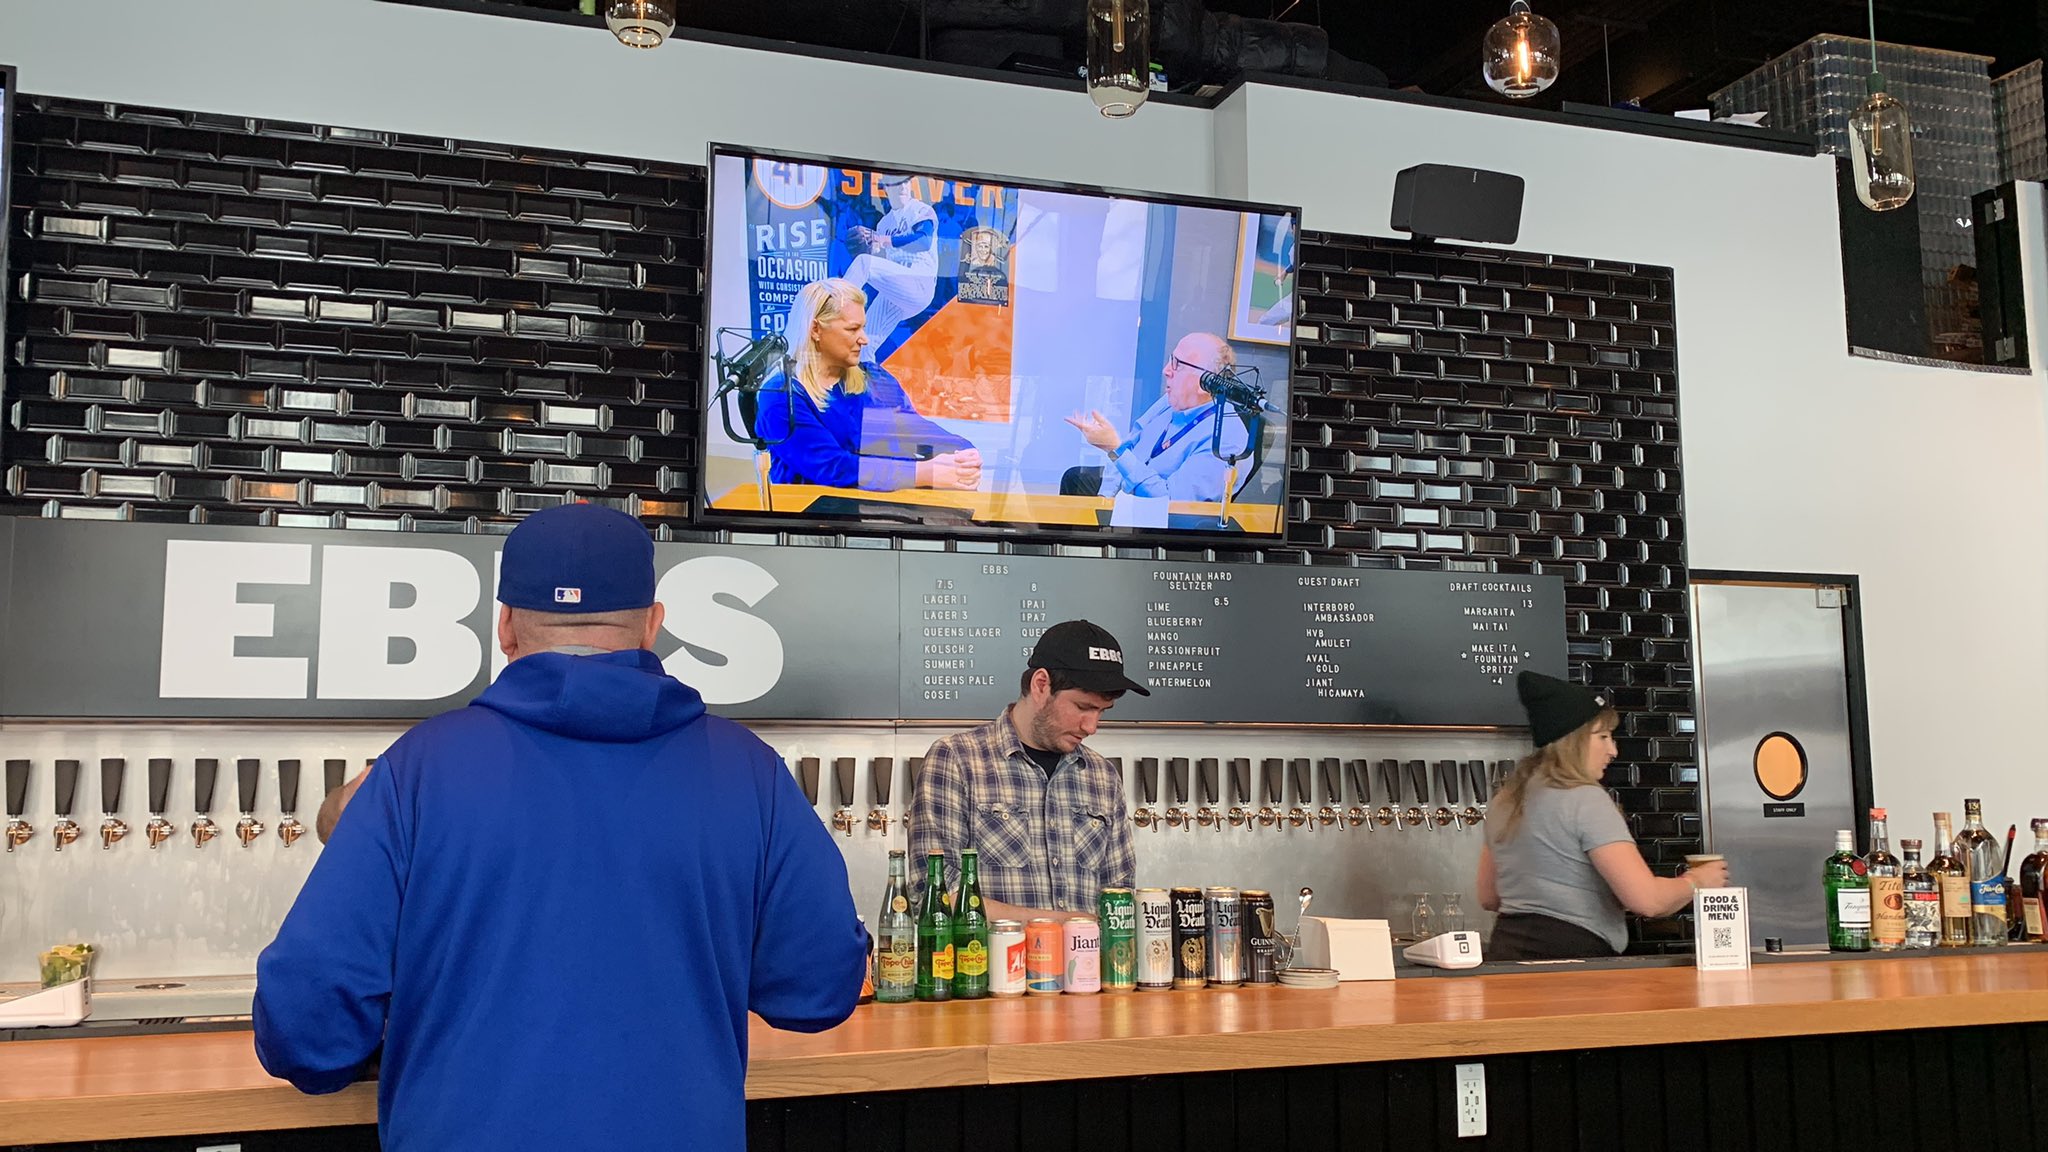 Former Mets star David Wright surprises bartender wearing his